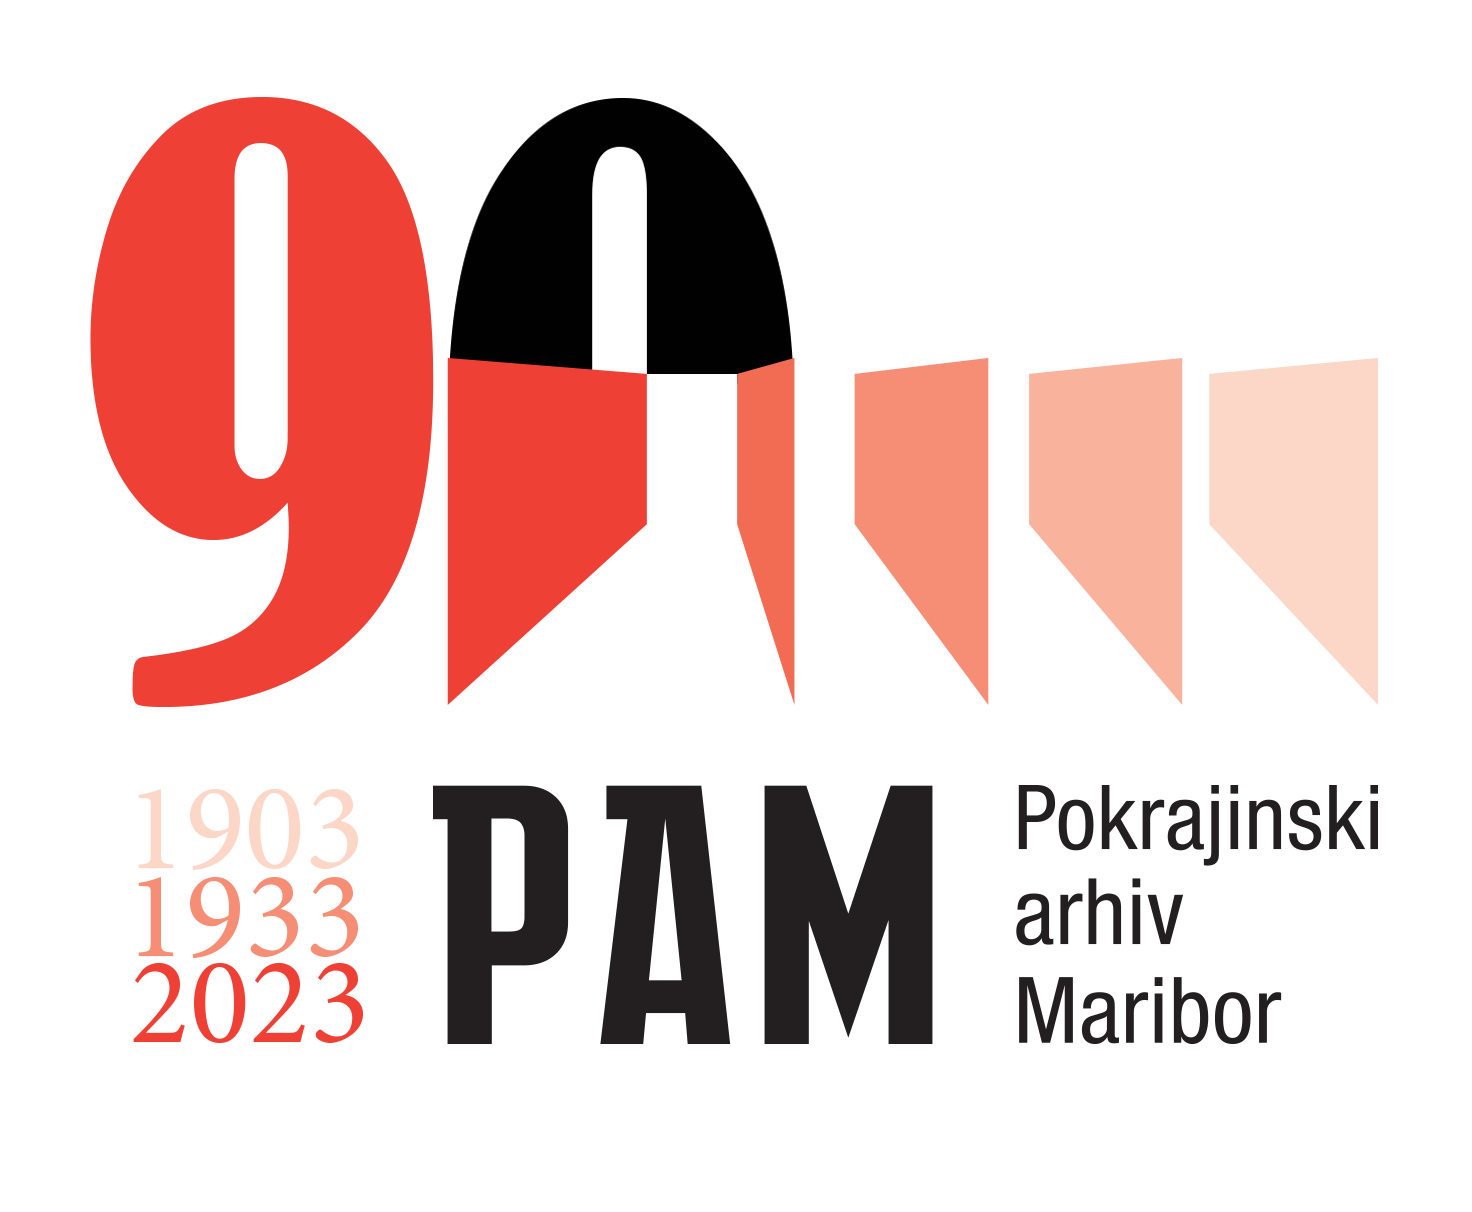 Logotip pokrajinski arhiv Maribor